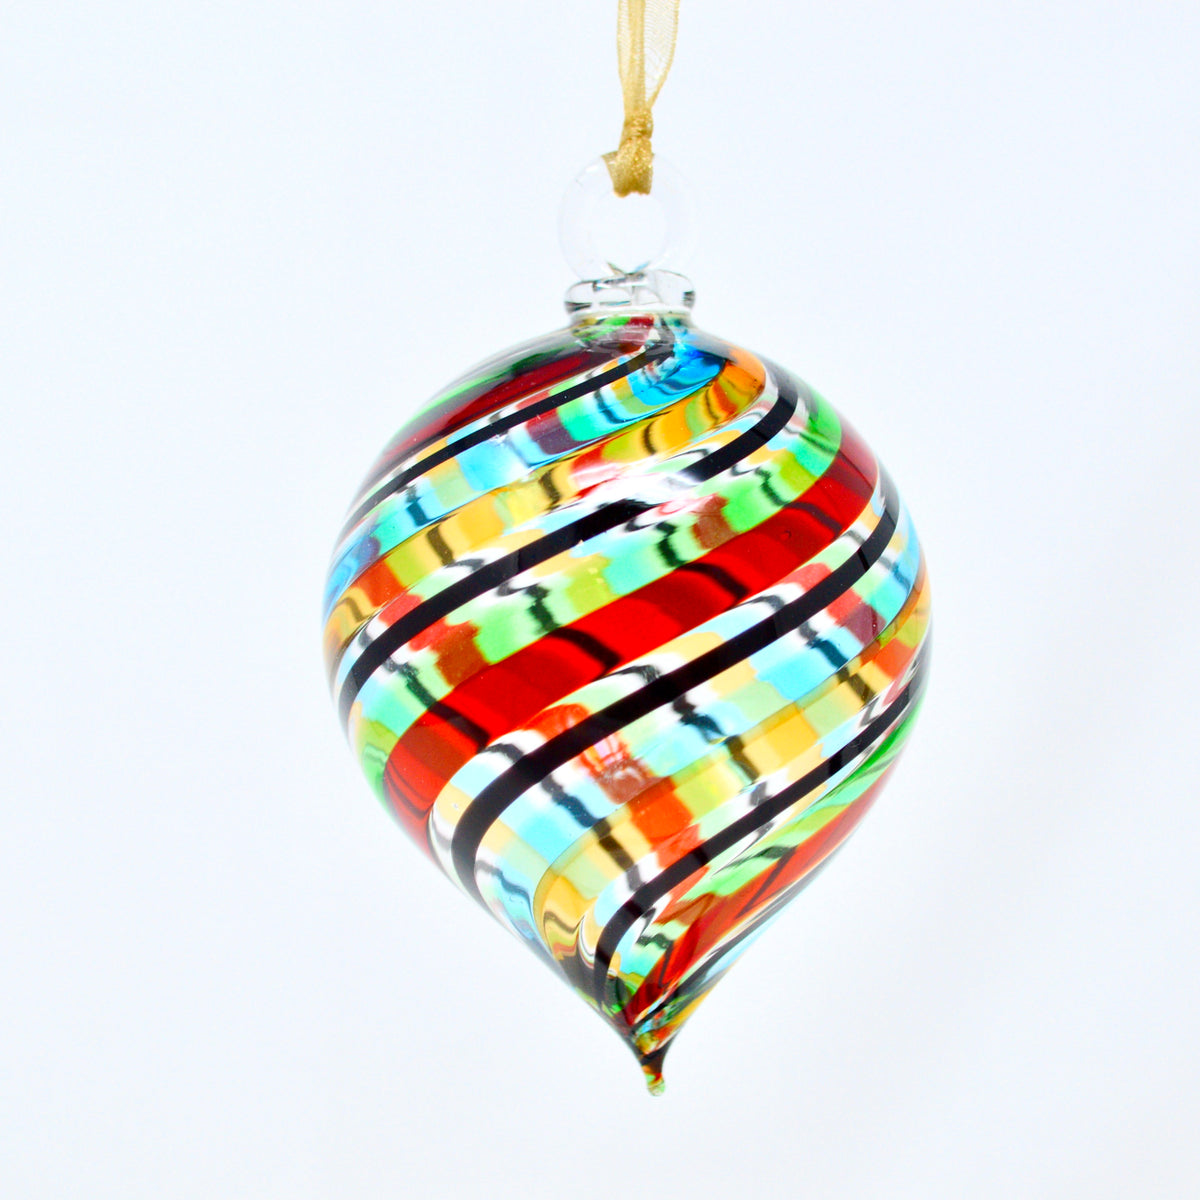 Murano Glass Christmas Ornament, Medium, Teadrop Filigrana, Made in Murano, Italy - My Italian Decor